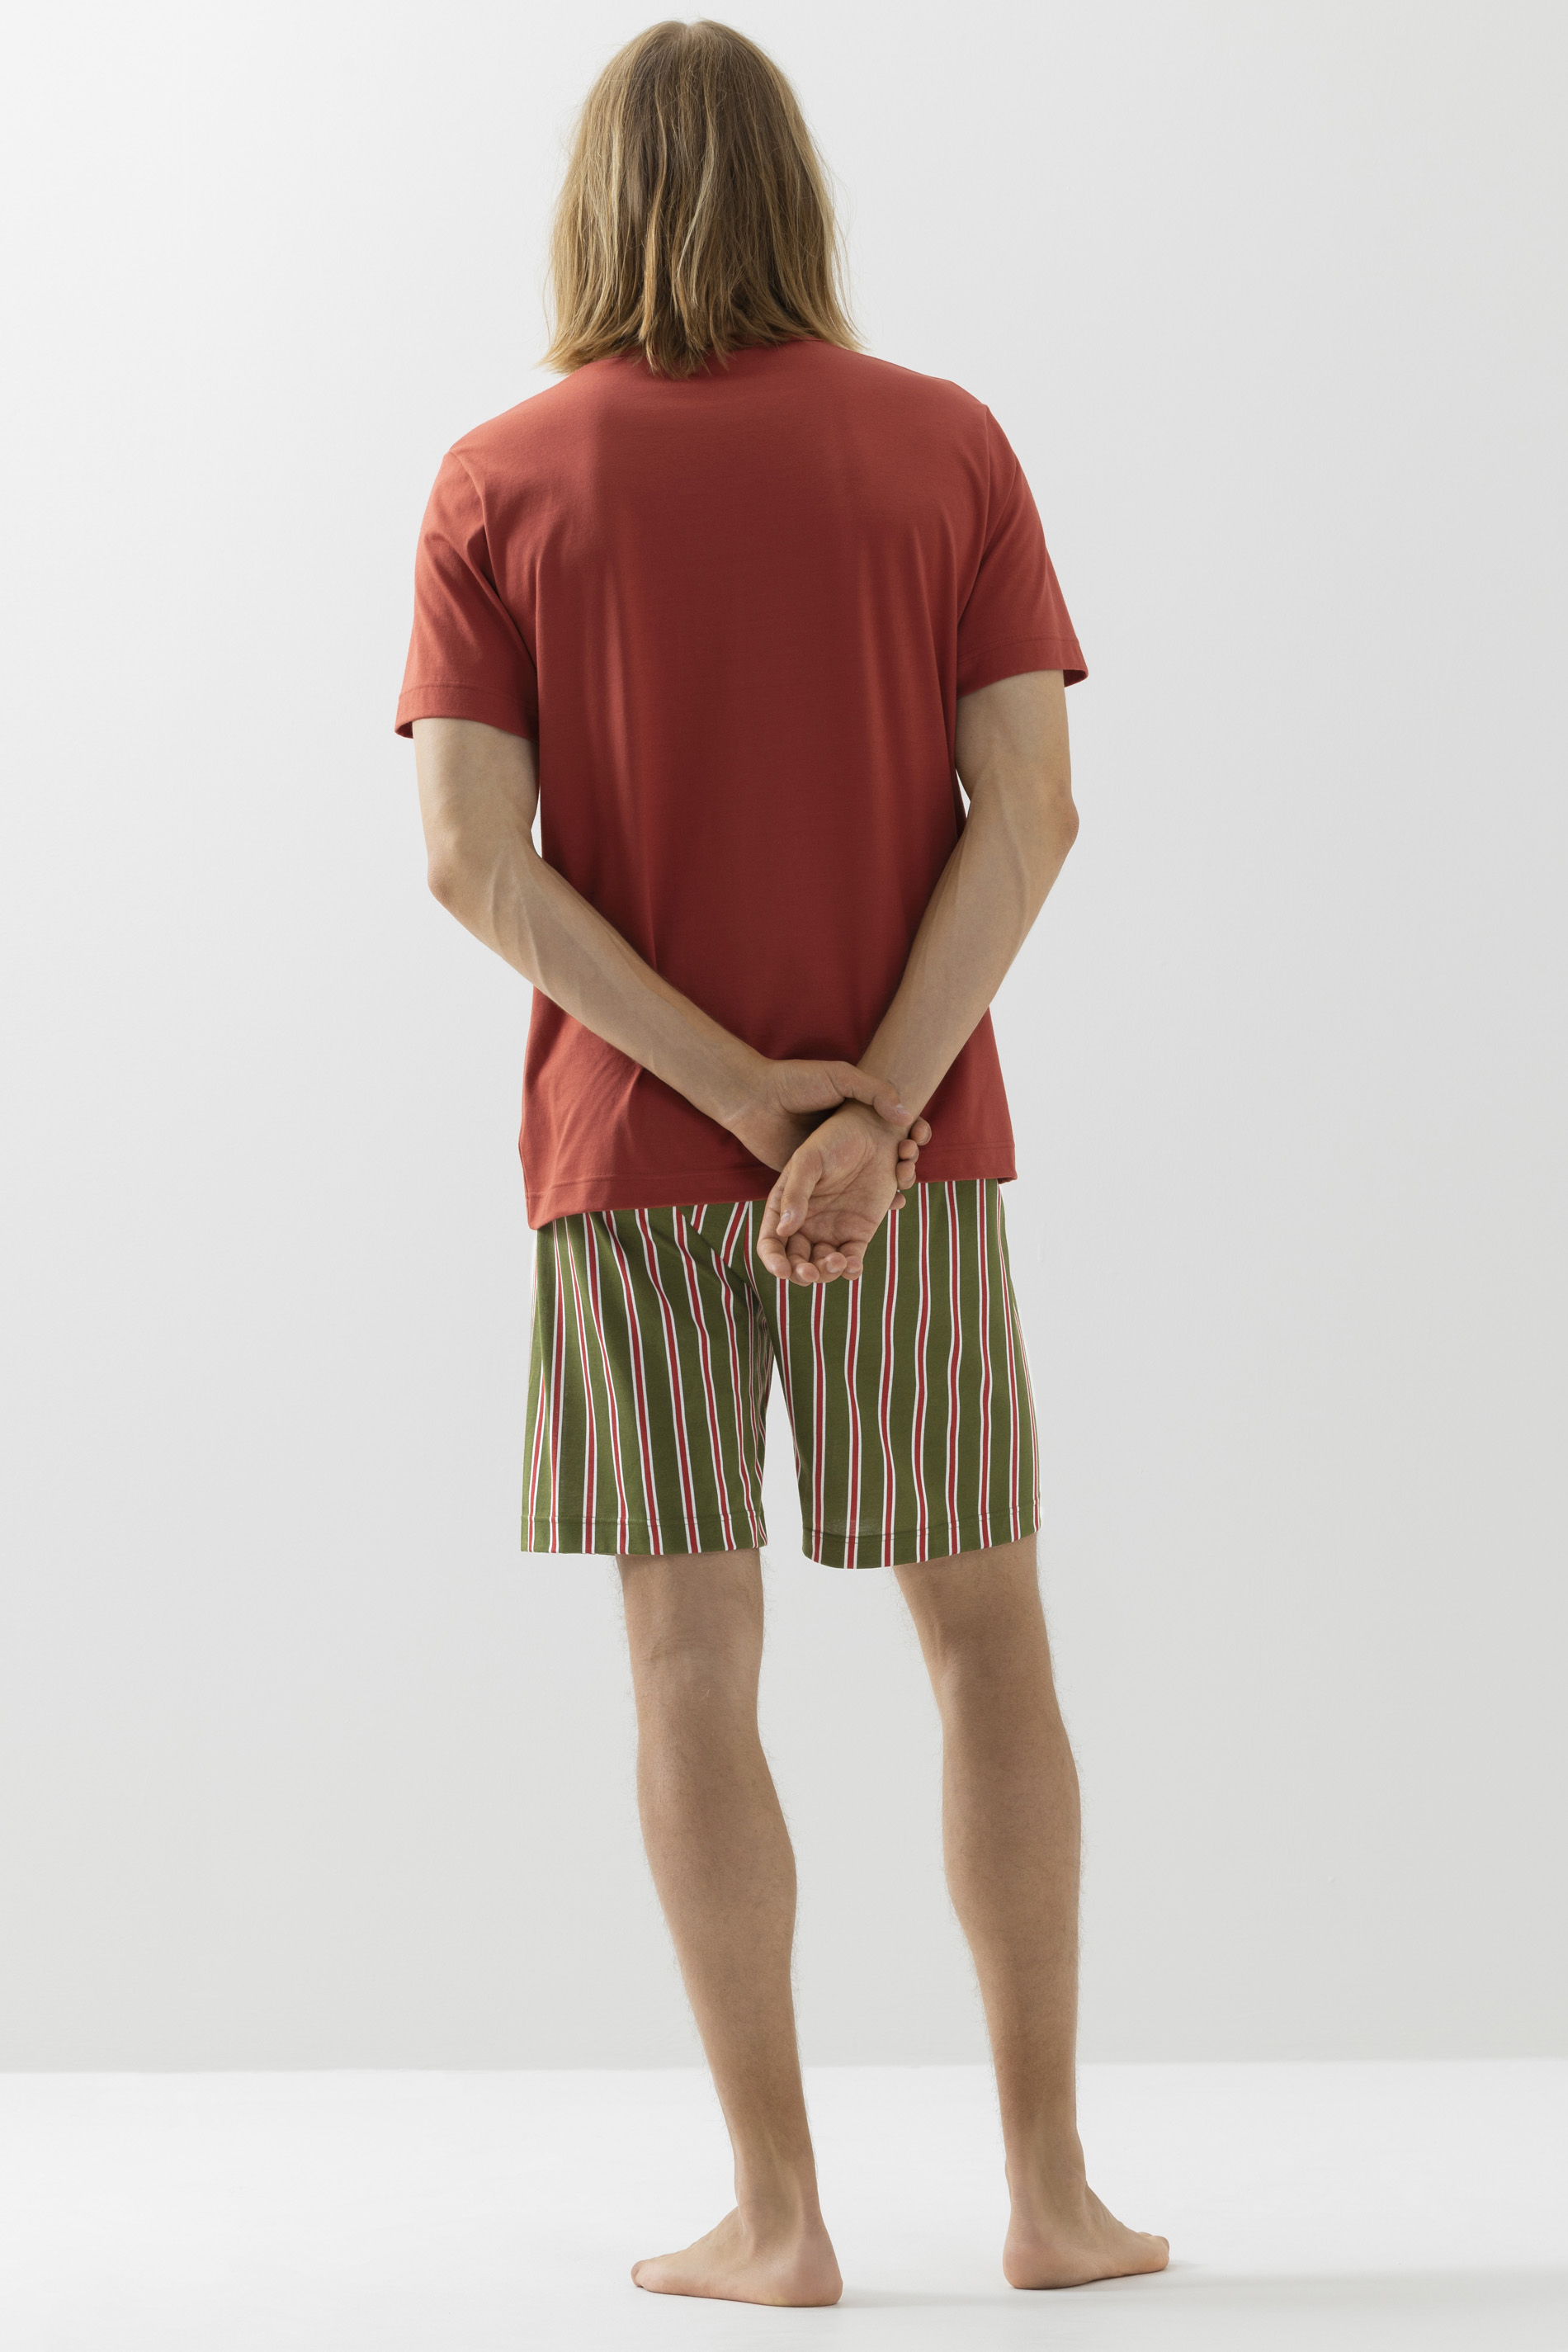 Schlafanzug Serie Stripes Rückansicht | mey®